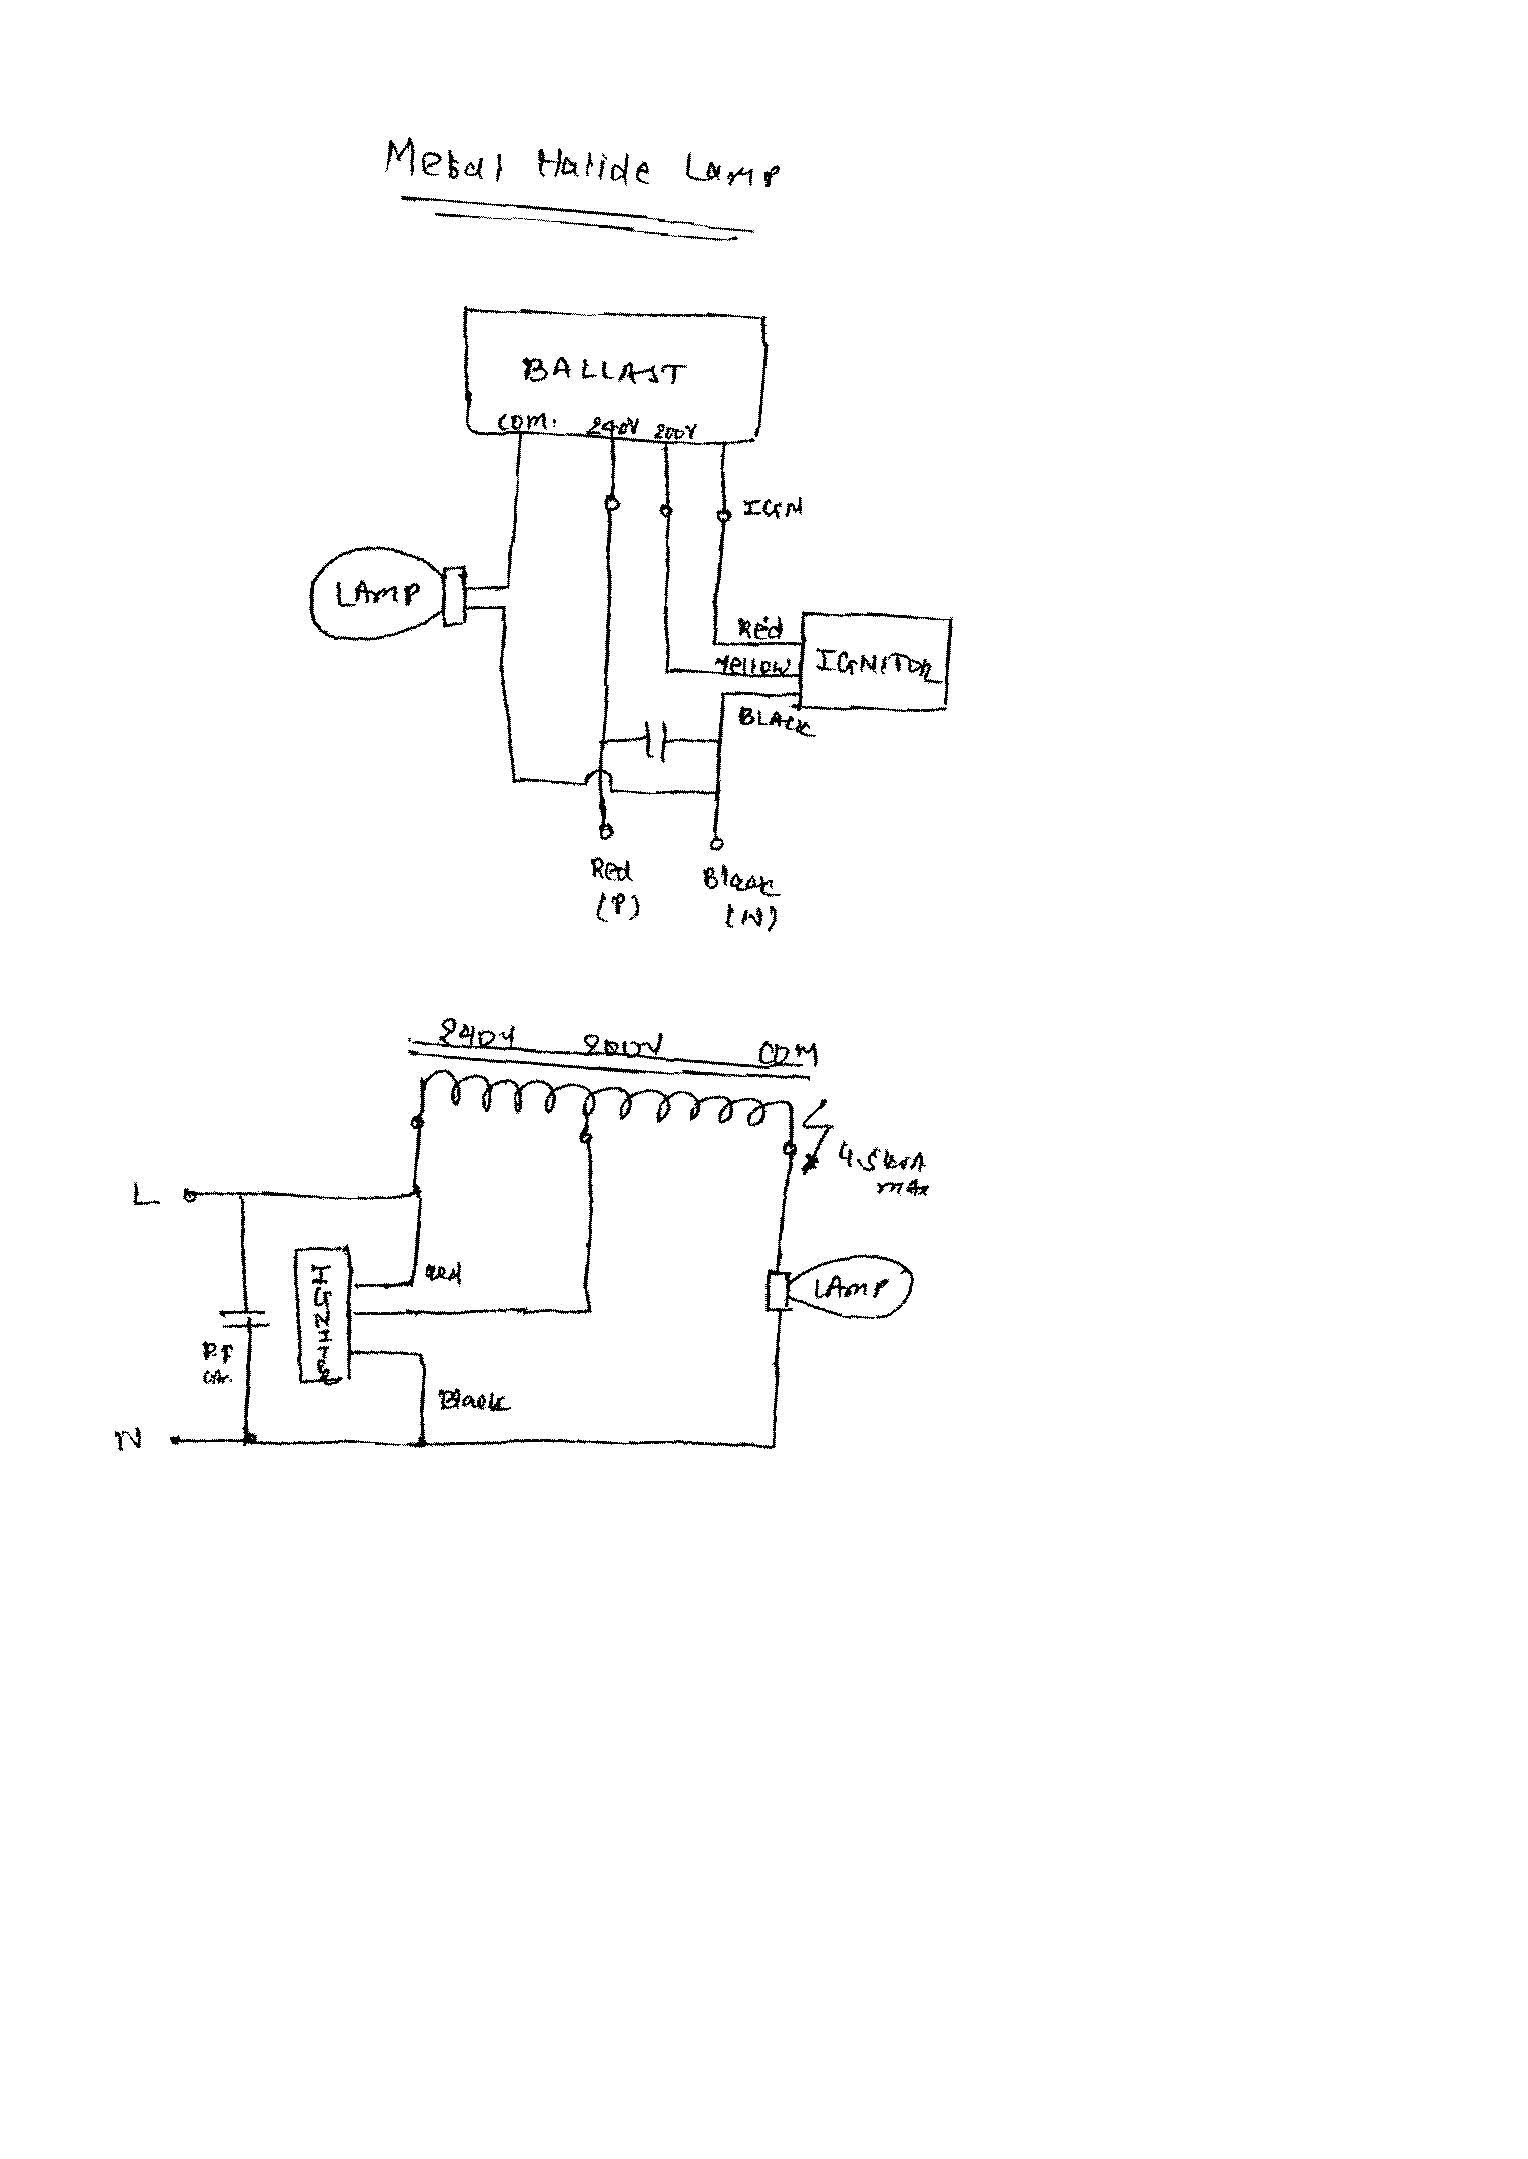 High Pressure sodium Lamp Wiring Diagram Inspirational Ponent Cell Sensor Circuit Patent Us Light Sensing